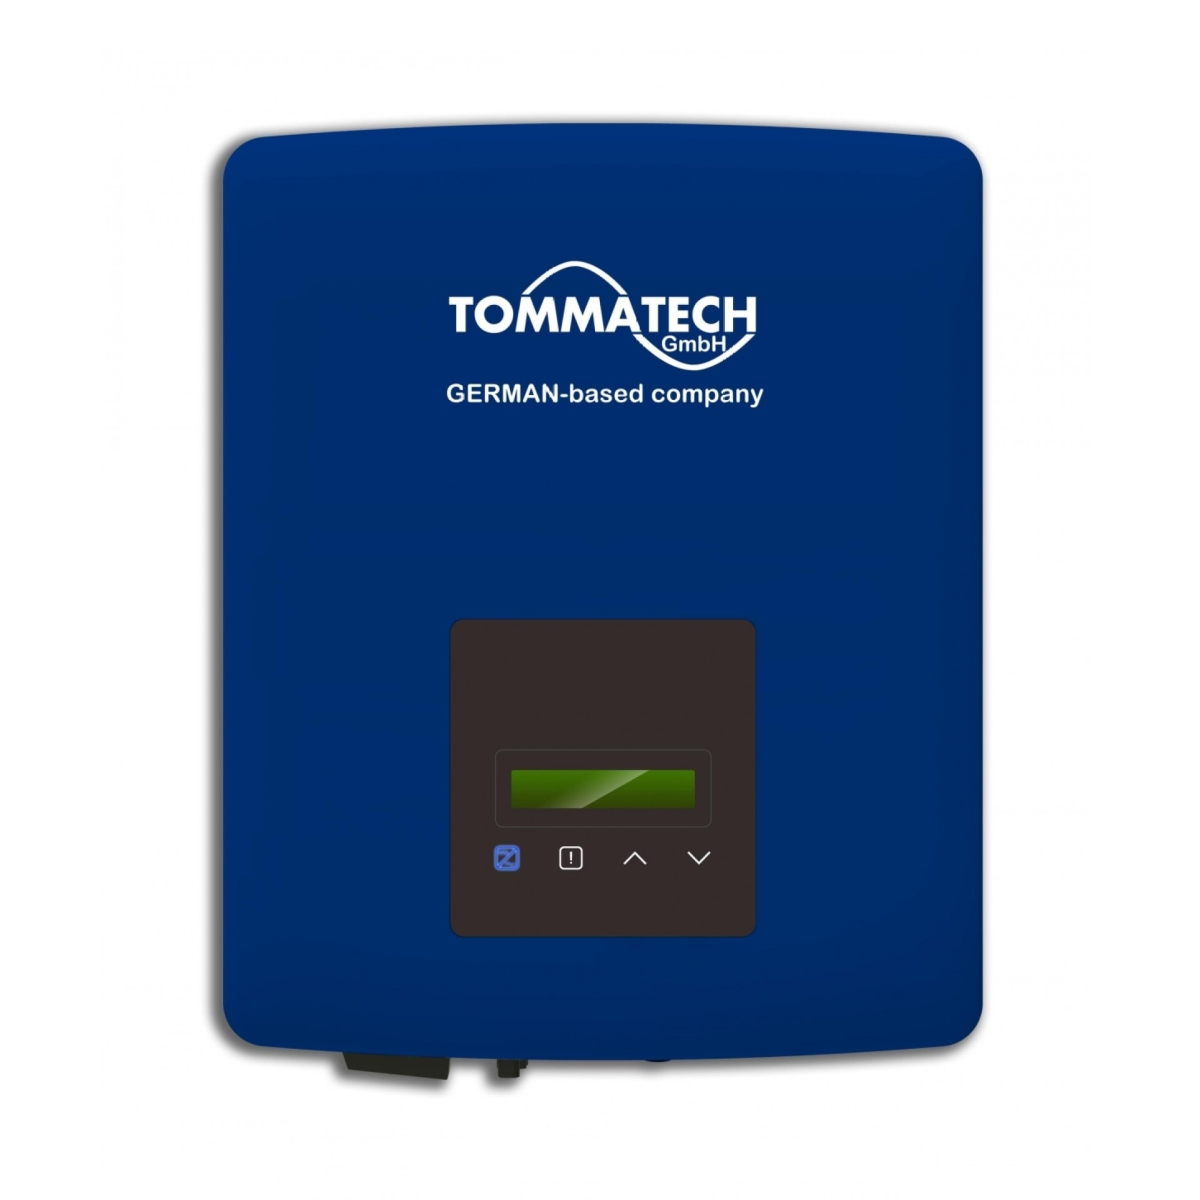 TommaTech Uno Atom 3.0kW Tek Faz İnverter